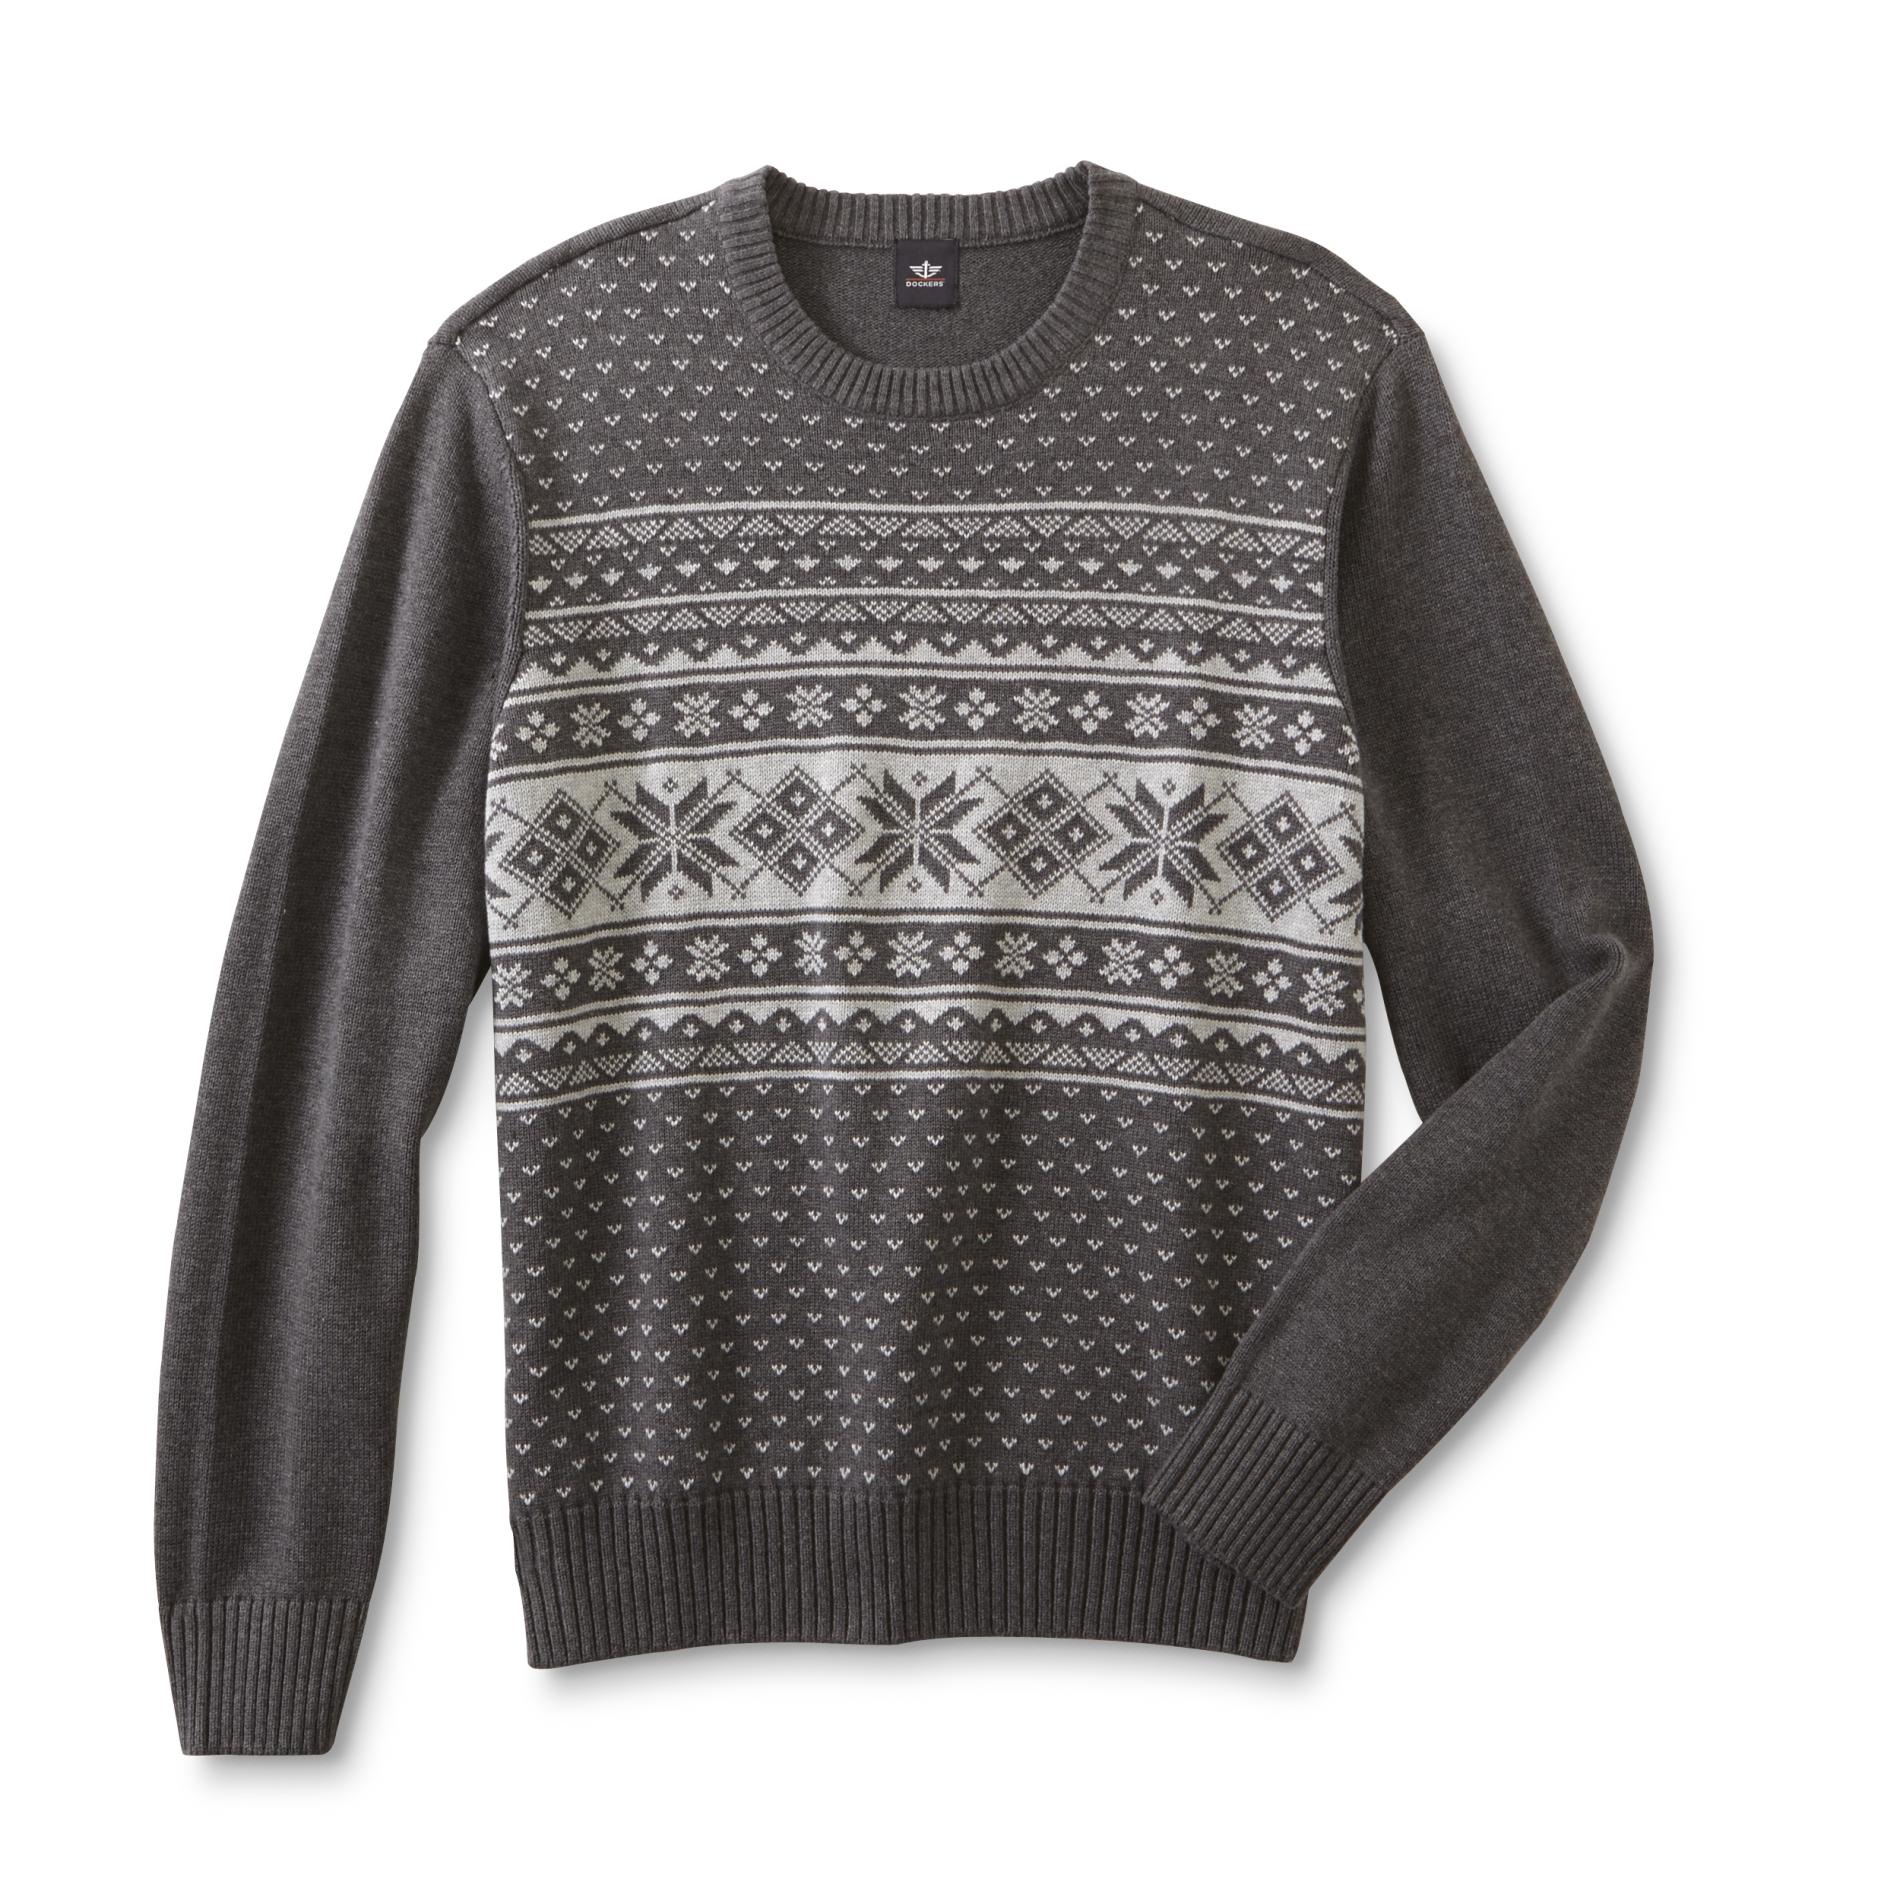 Dockers Men's Christmas Sweater - Snowflakes